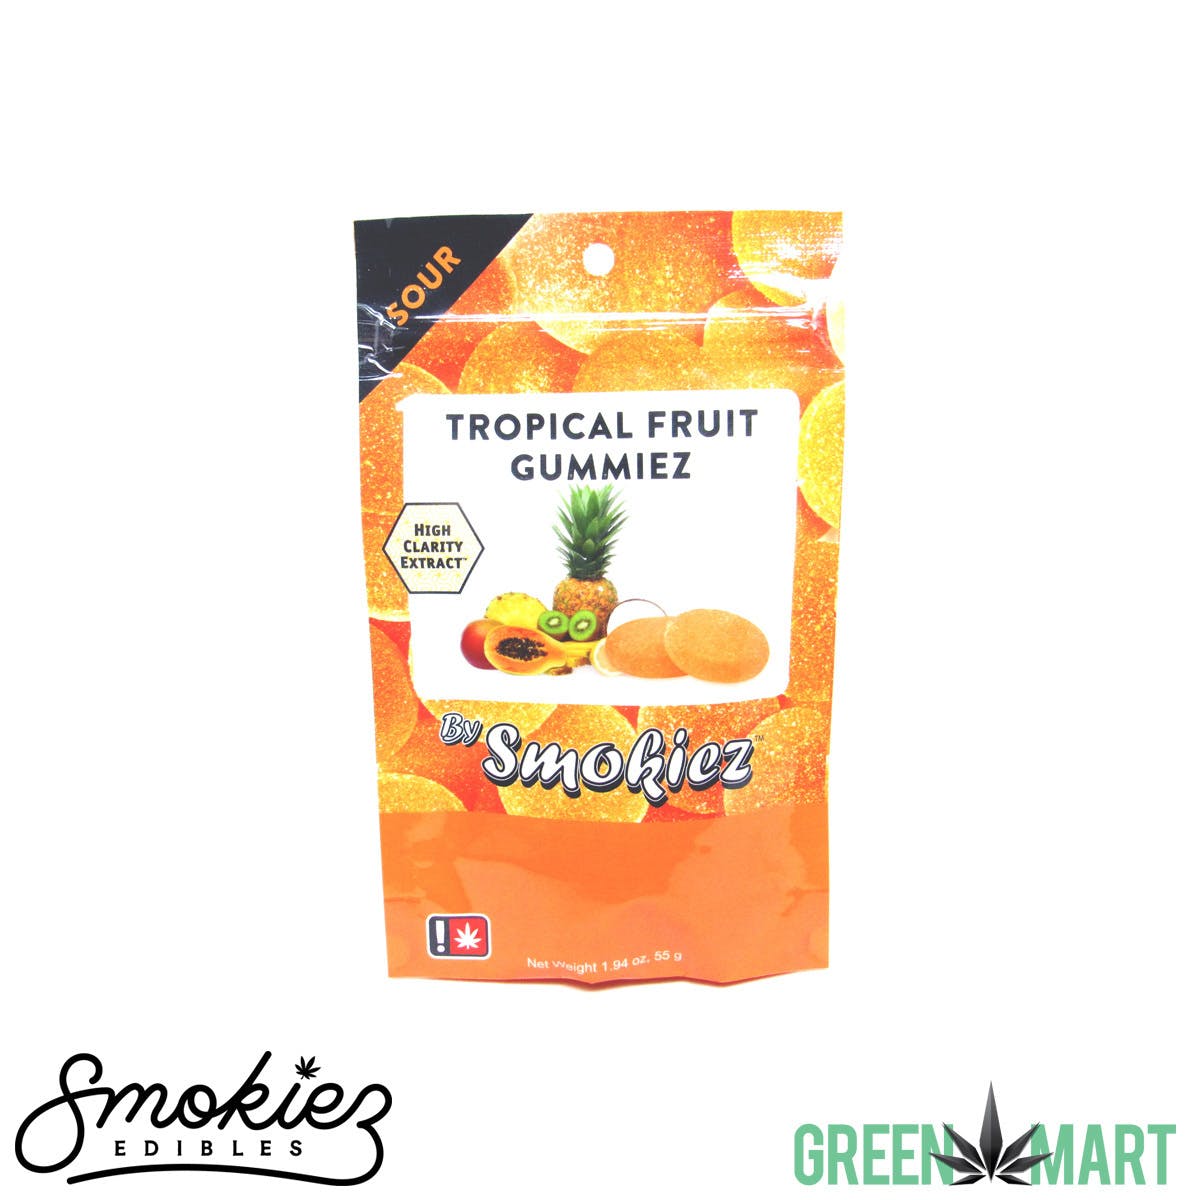 edible-smokiez-sour-gummiez-tropical-fruit